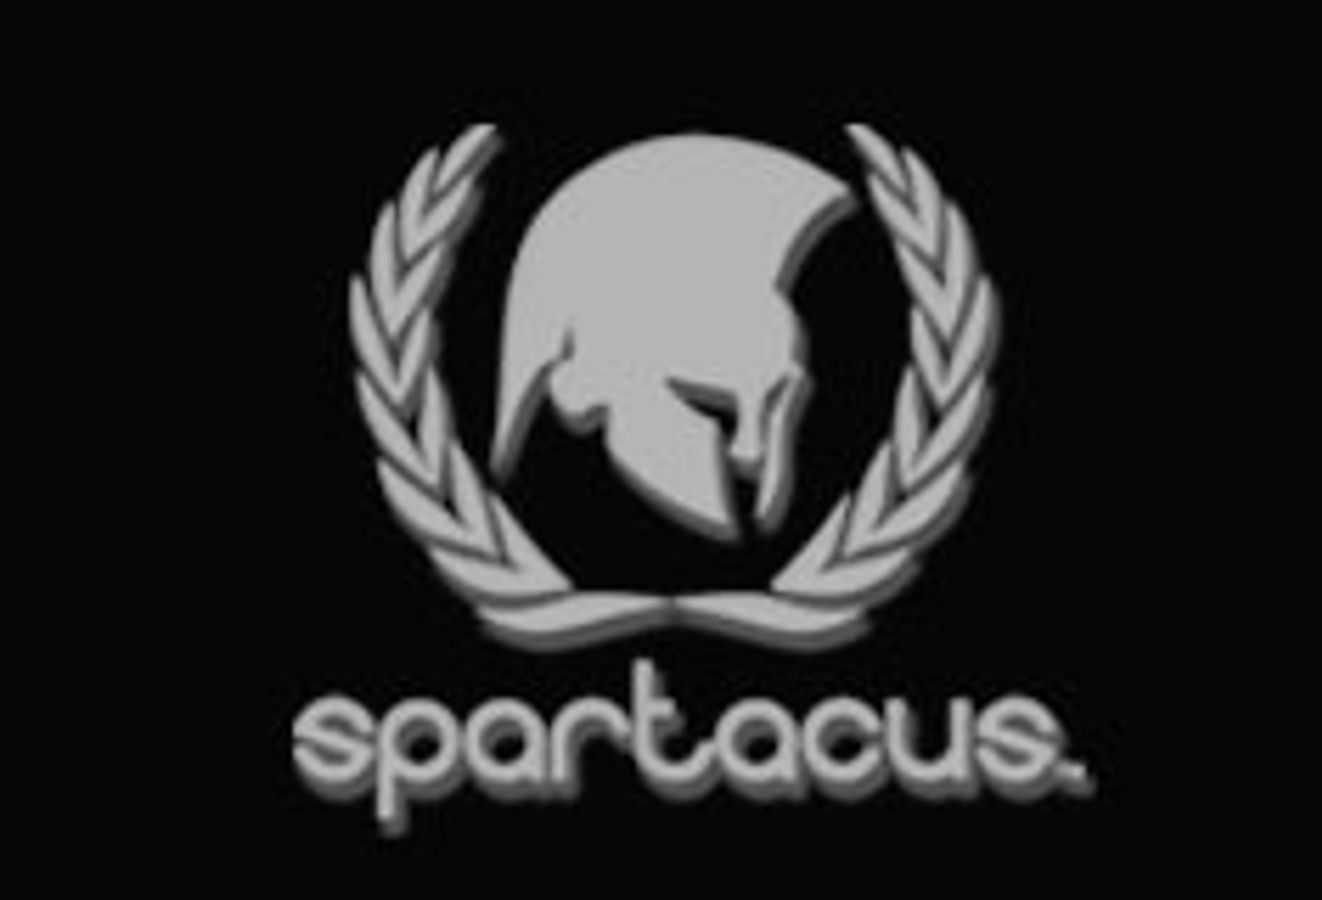 Spartacus Leathers